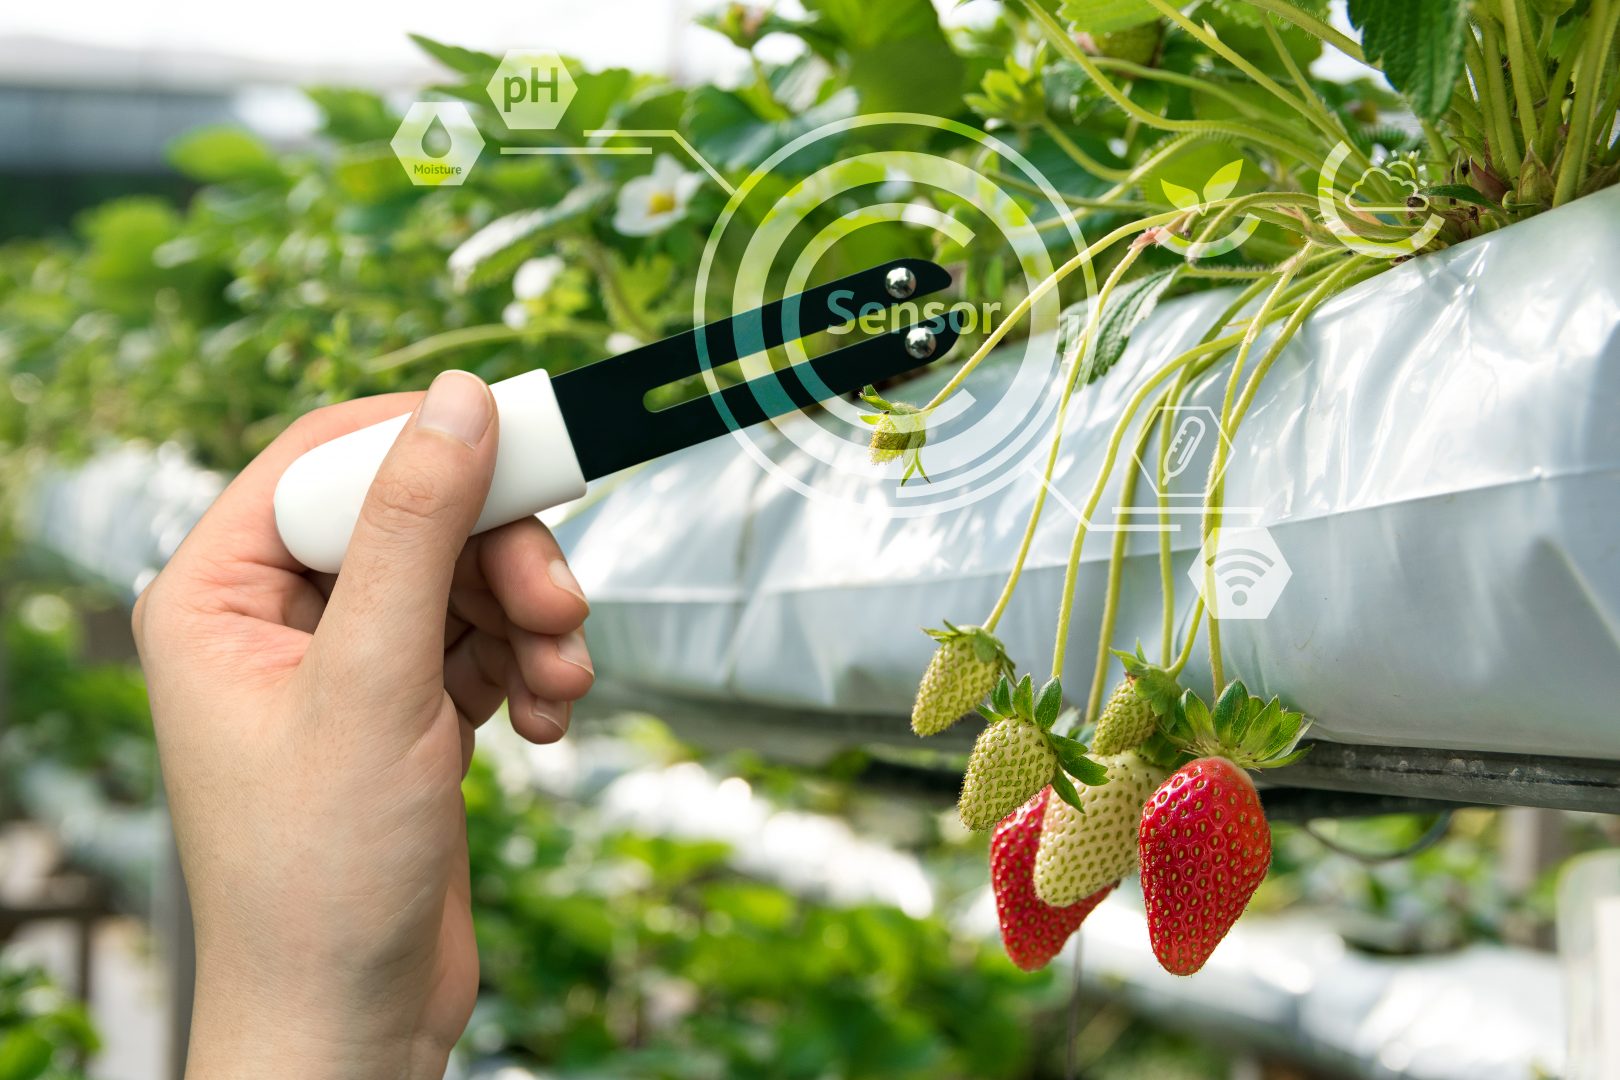 farmer using TeamViewer iot sensor device to harvest strawberries in smart farming